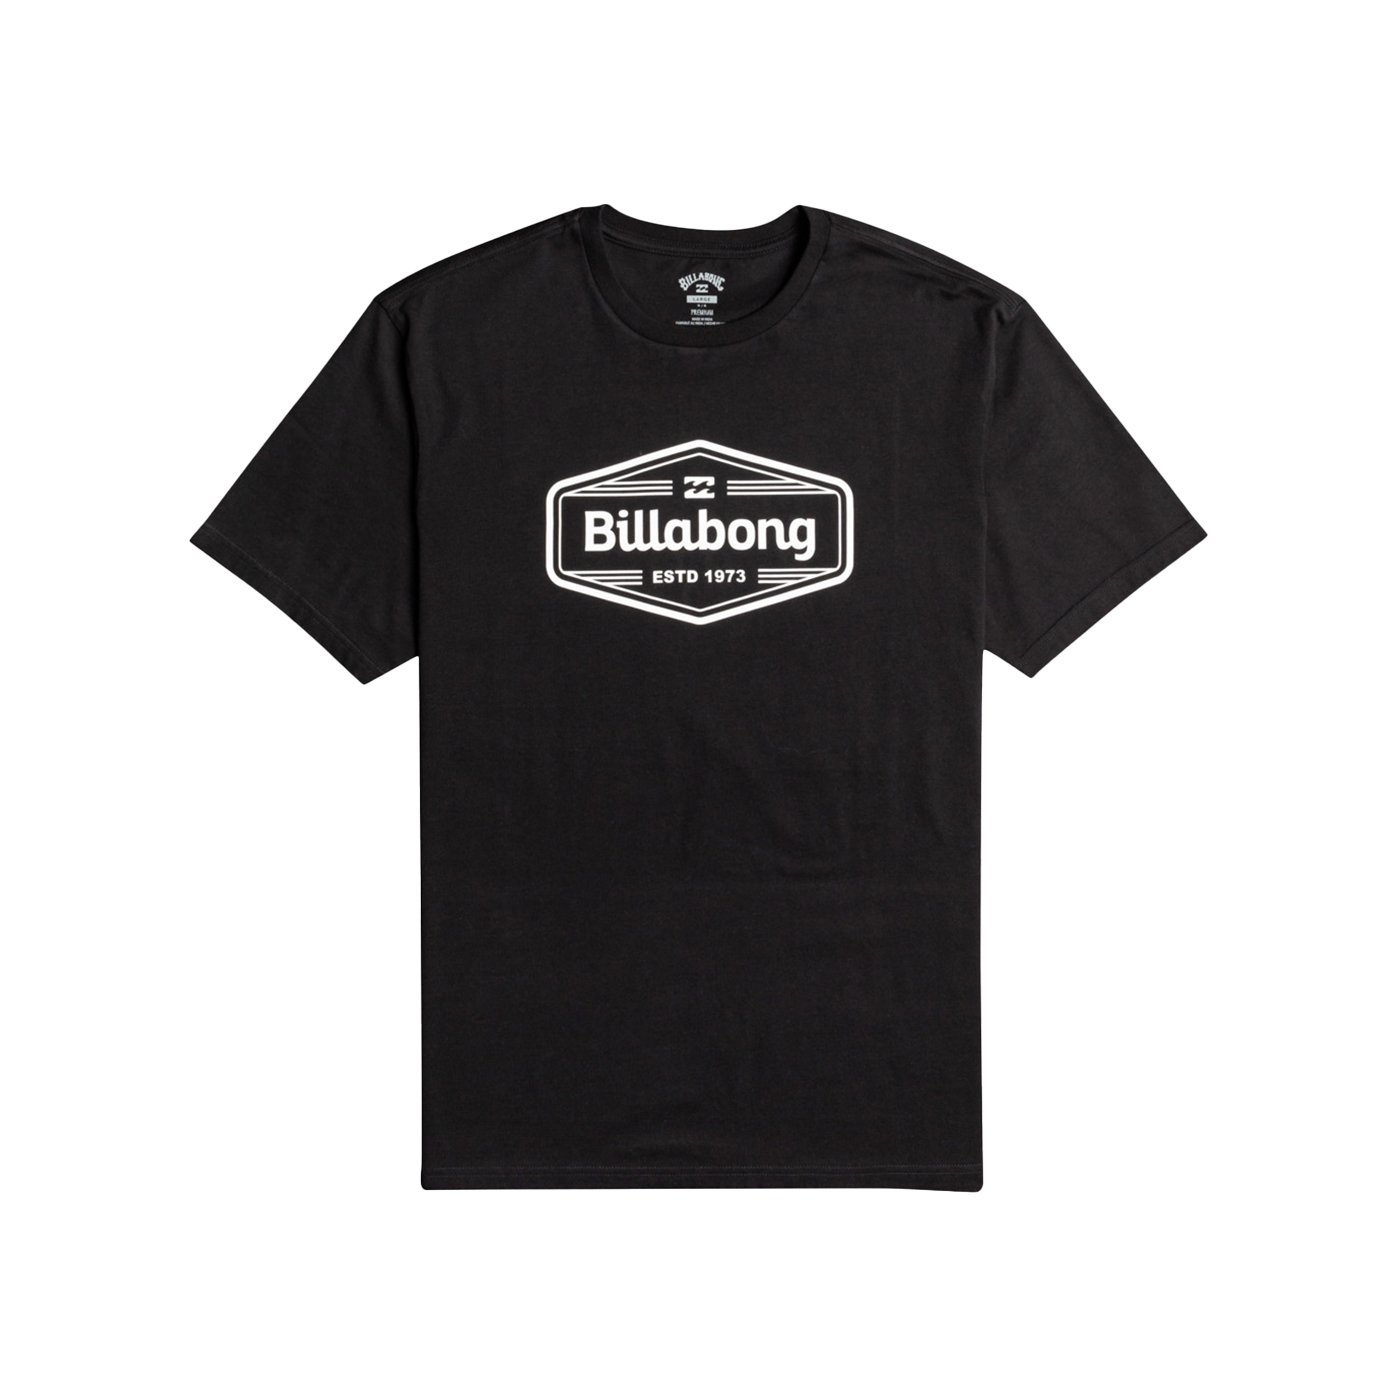 Billabong Trademark Erkek Tişört - Siyah - 1